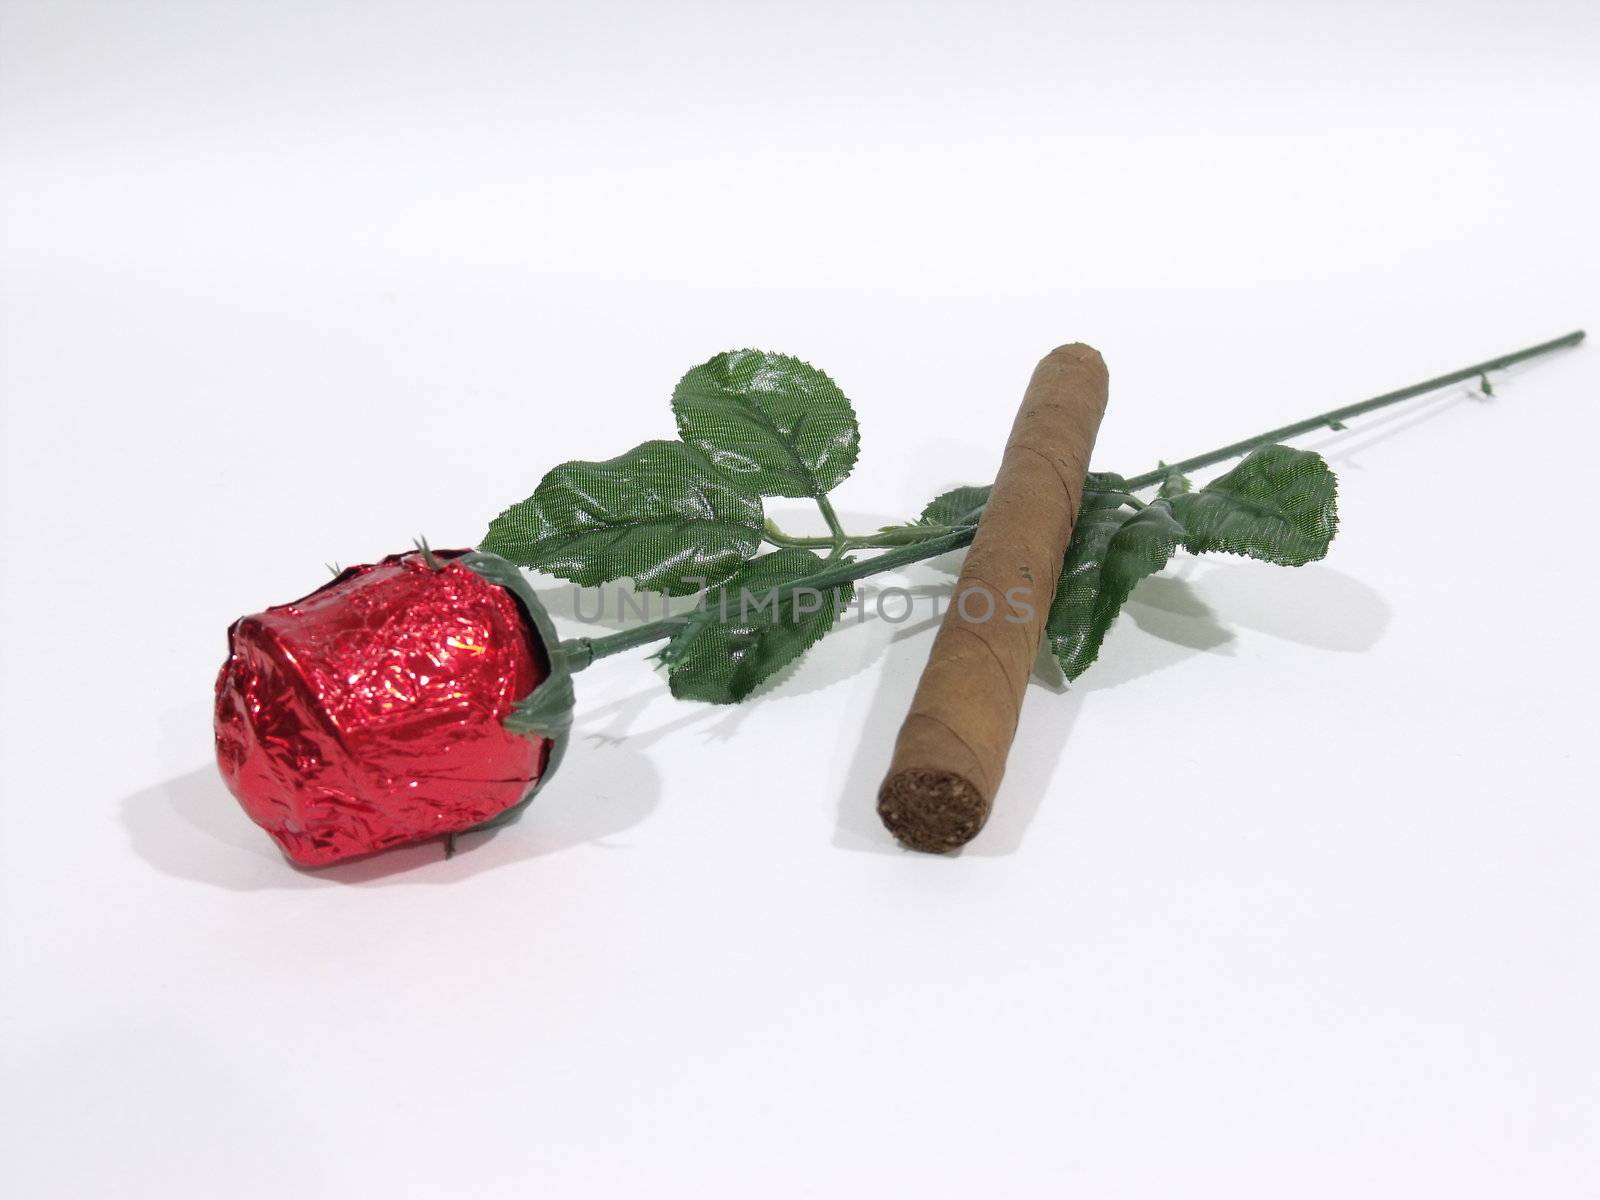 Cigar lying on artificial rose by WarburtonPhotos